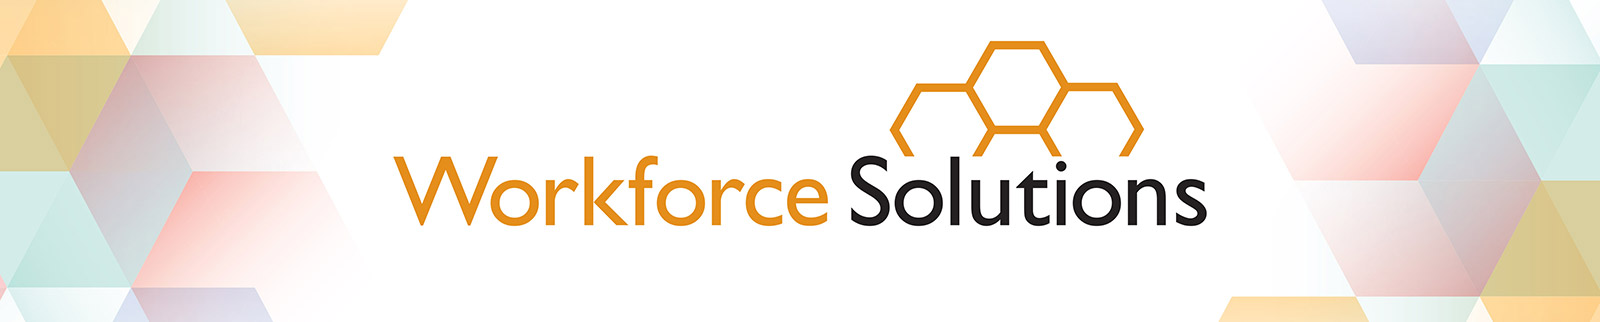 Workforce solutions logo